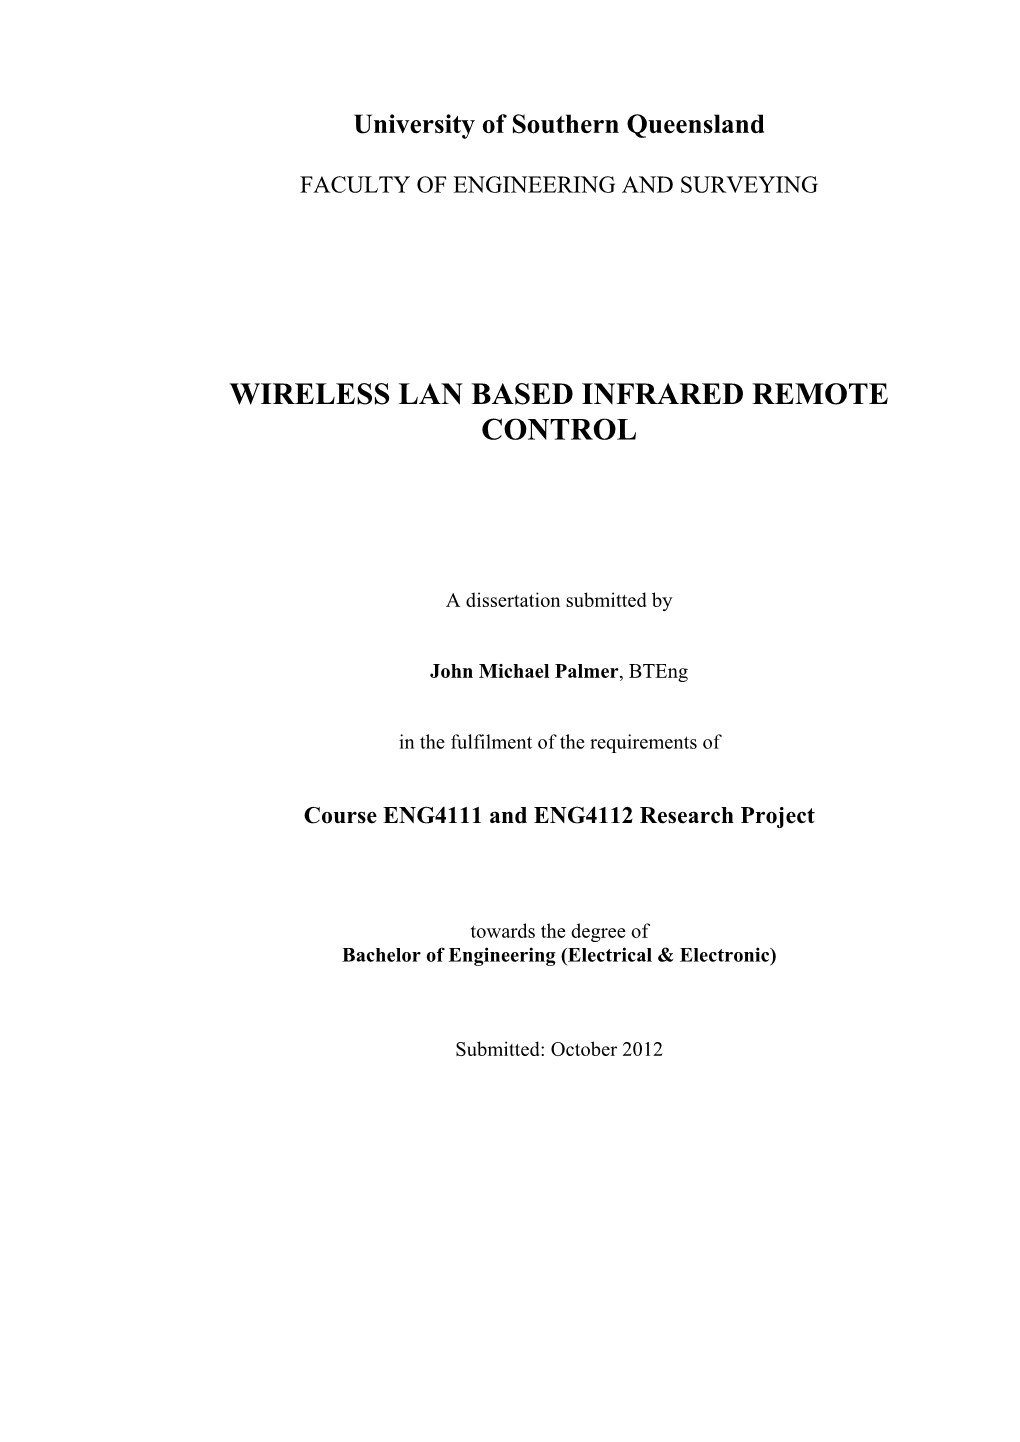 Wireless Lan Based Infrared Remote Control